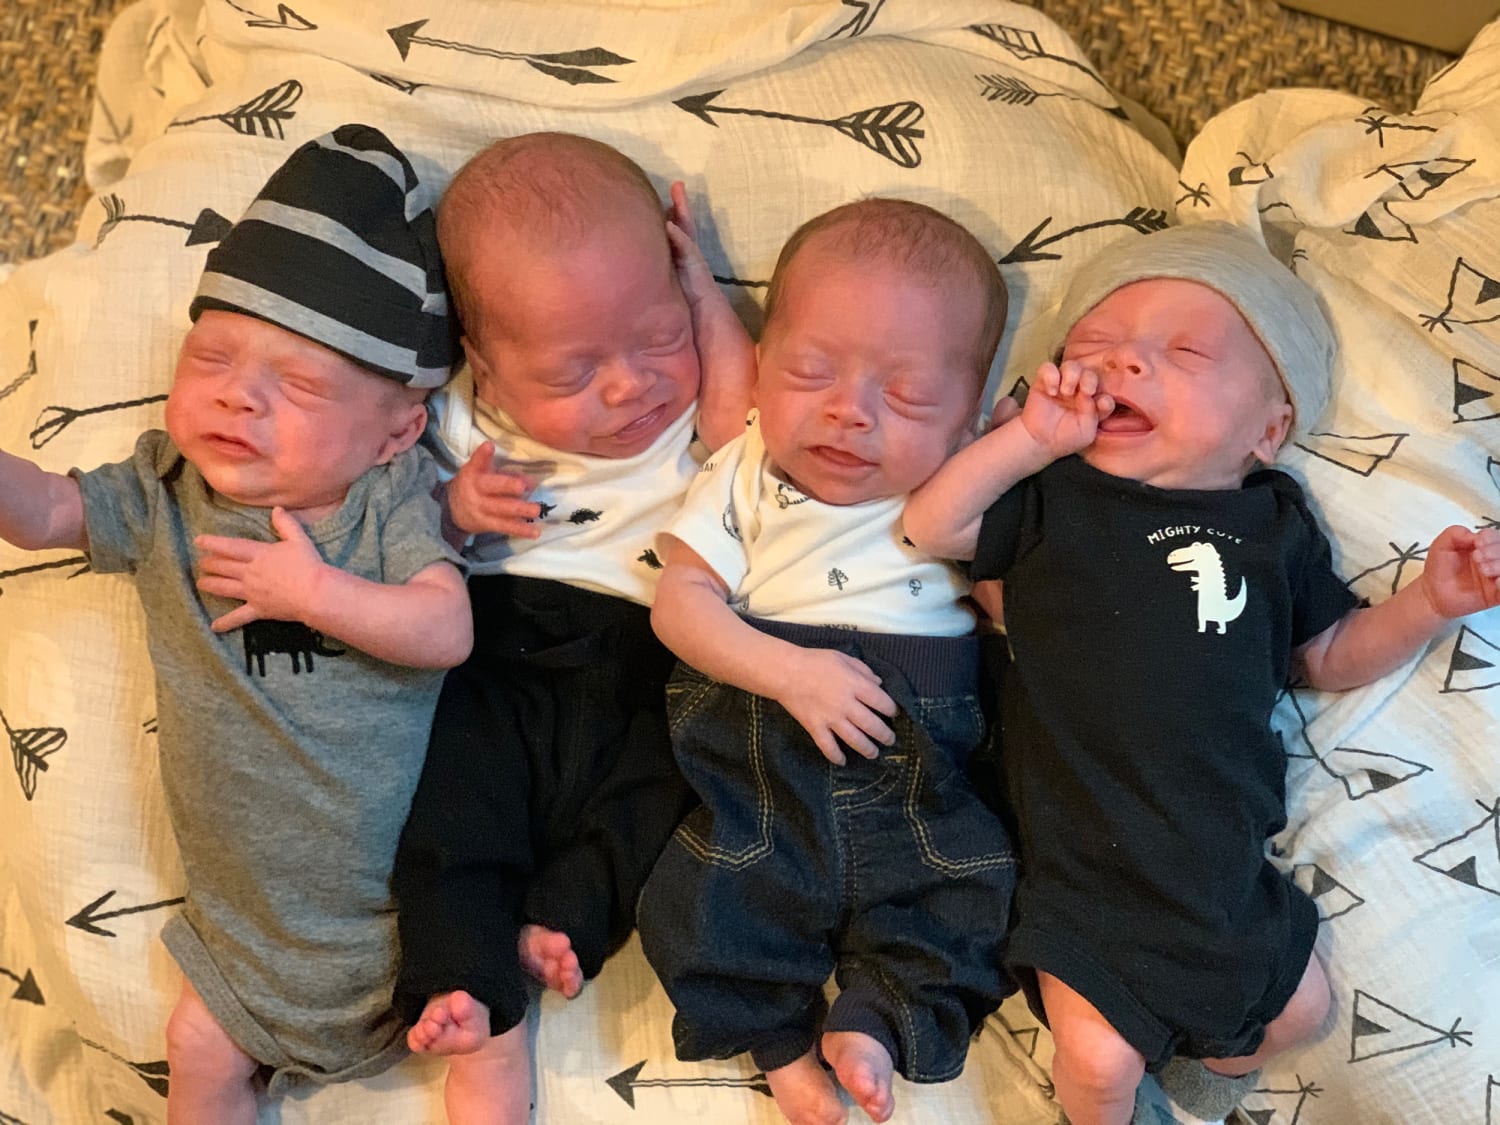 identical quadruplet babies